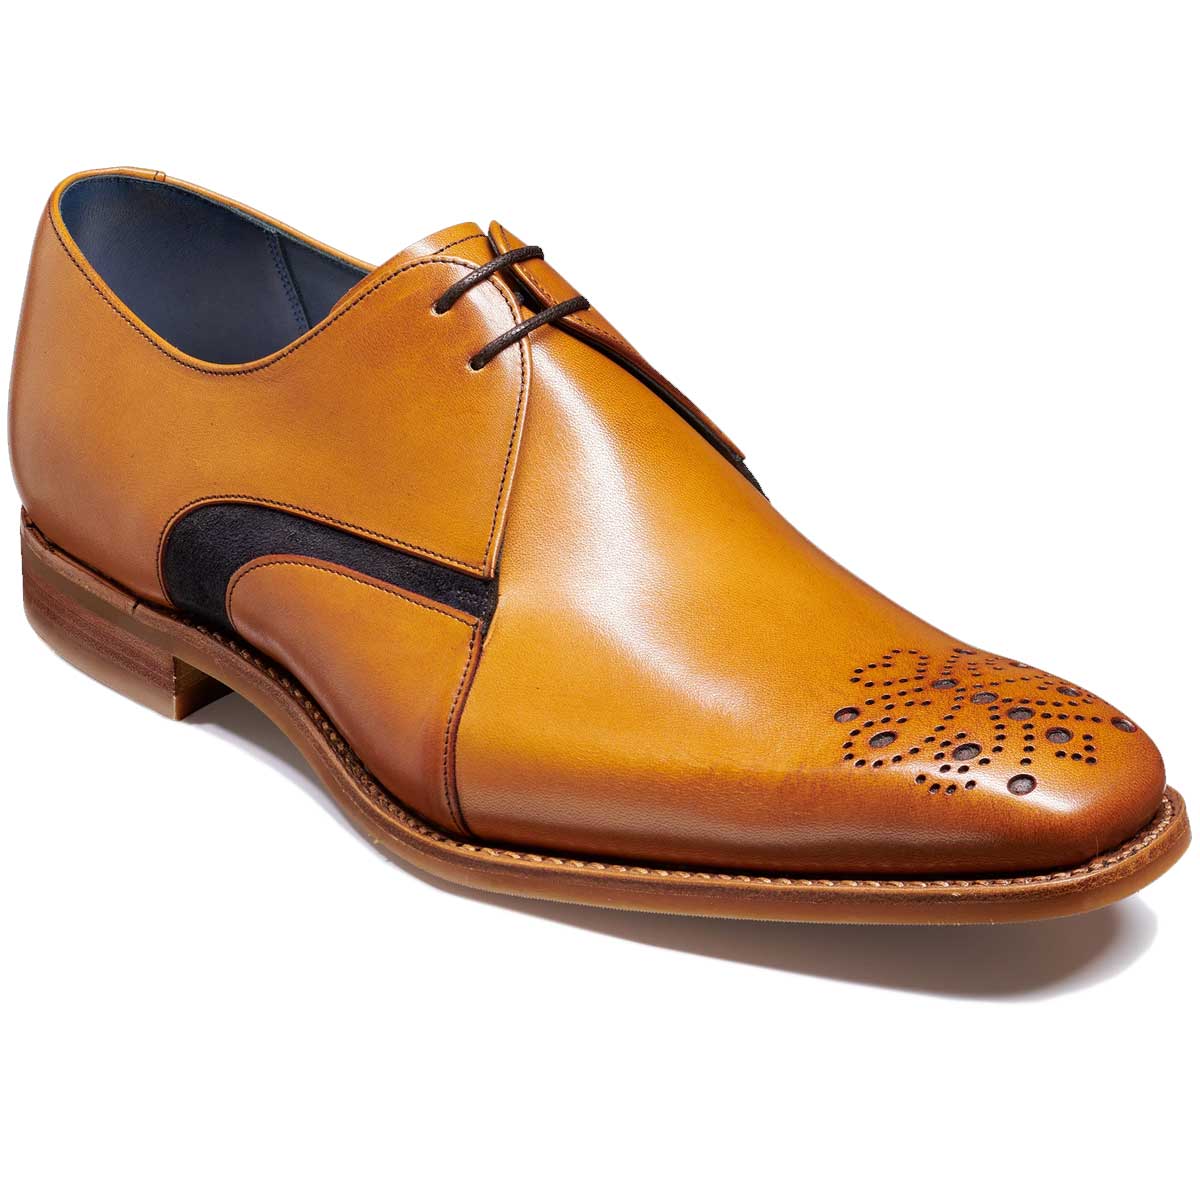 BARKER Sullivan Shoes - Mens - Cedar Hand Painted & Navy Suede